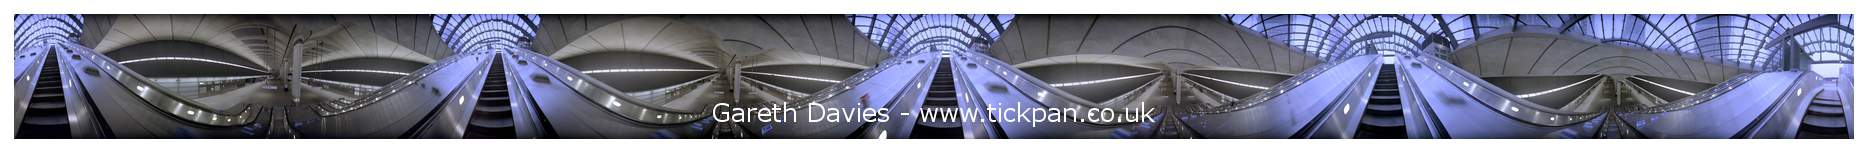 10224 - Rotating image on an escalator at Canary Wharf, London (88K)